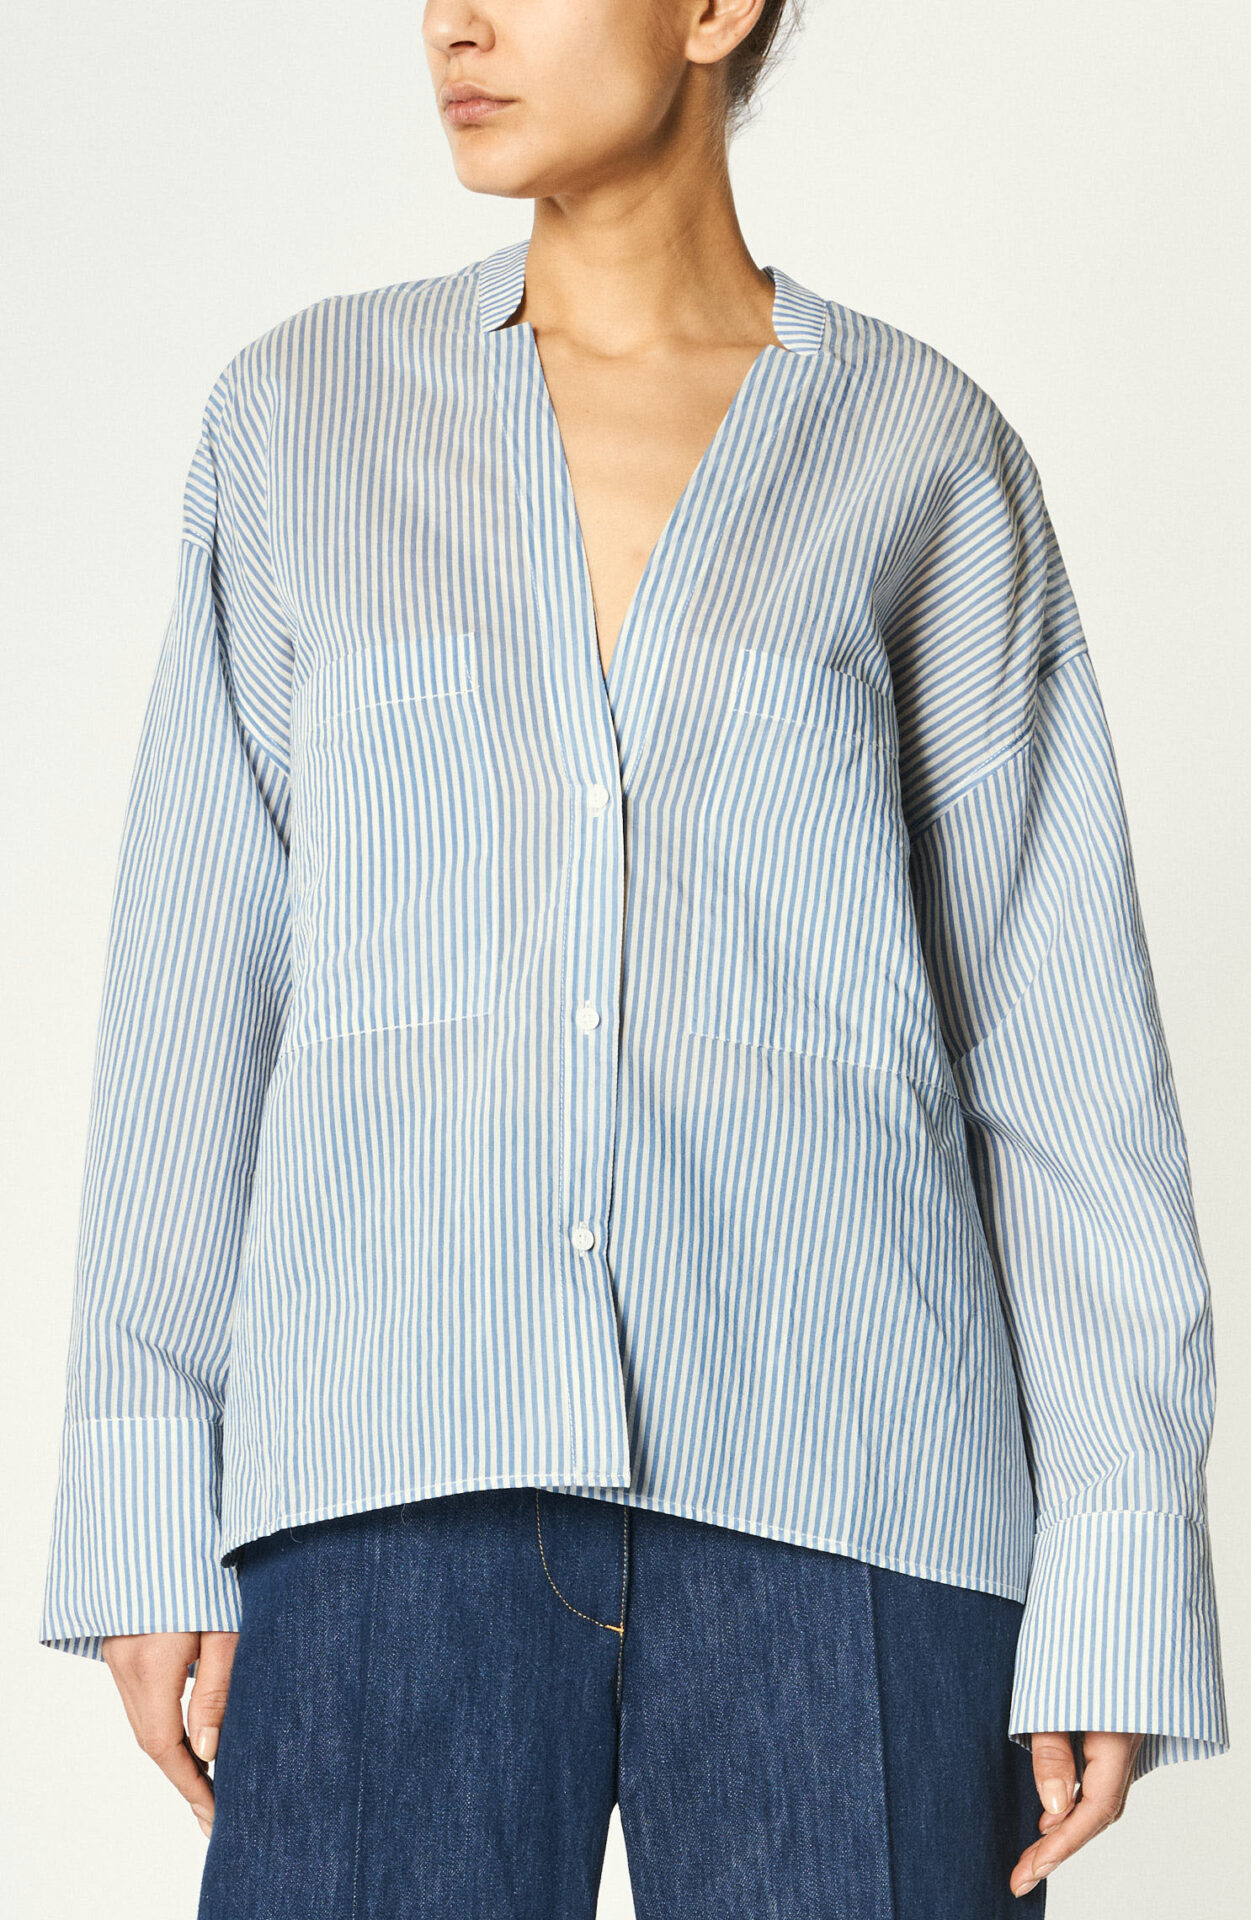 Christian Wijnants - Striped oversize shirt blouse 